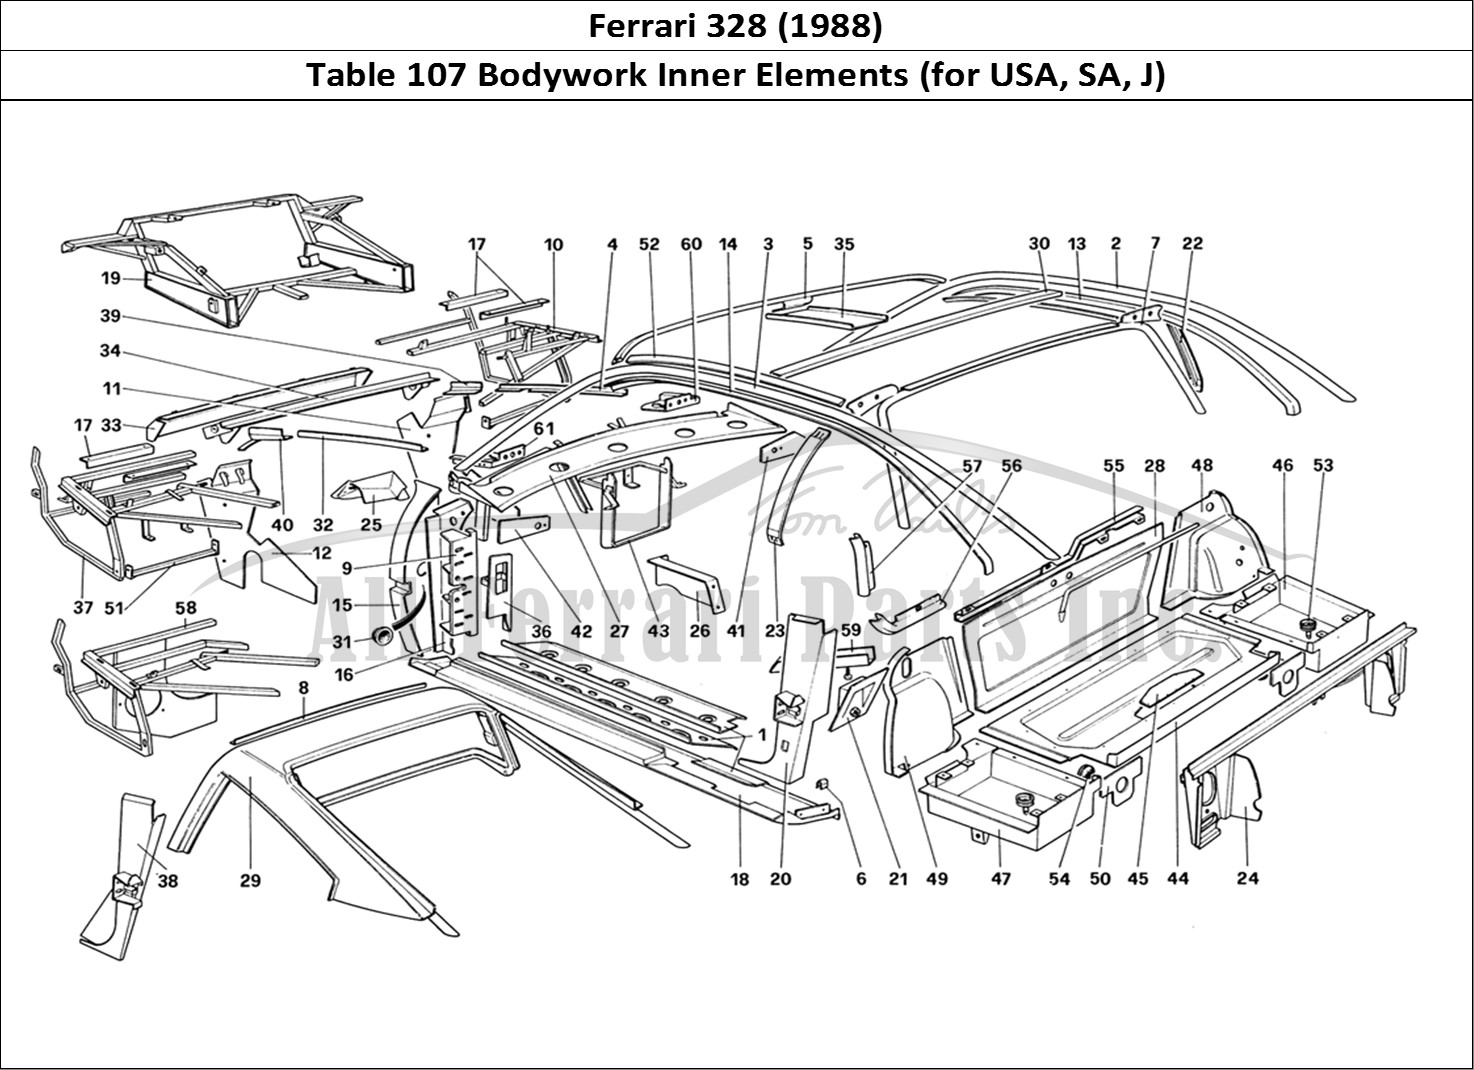 Ferrari Parts Ferrari 328 (1988) Page 107 Body Shell - Inner Elemen